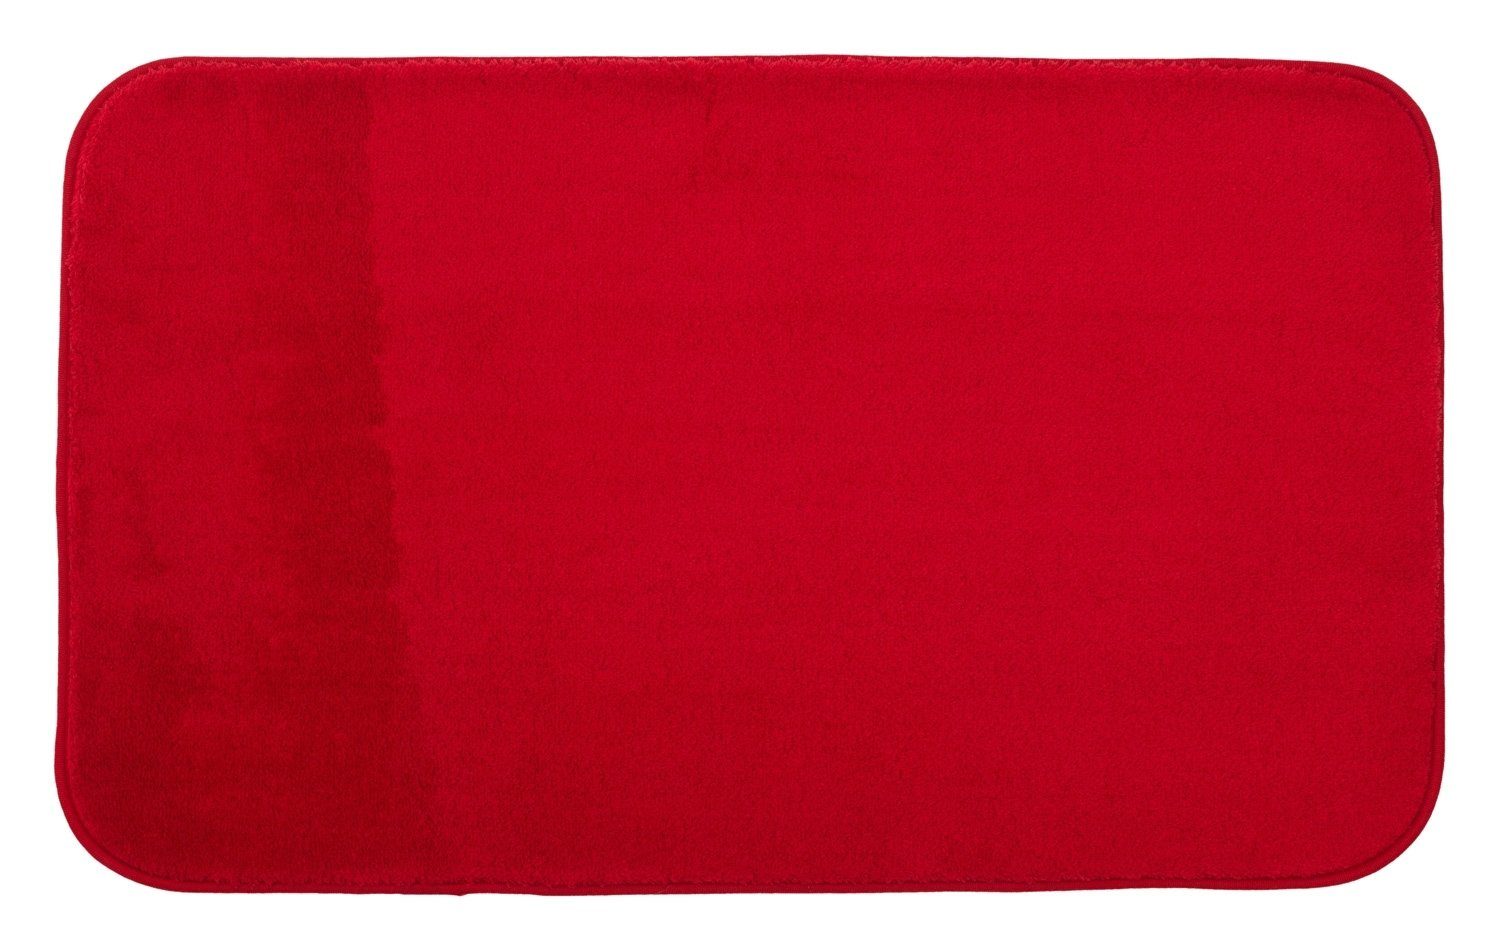 Badematte RIO, Rot, 120 x 70 cm, Uni, rutschhemmend beschichtet, fußbodenheizungsgeeignet, Mikrofaser, rechteckig